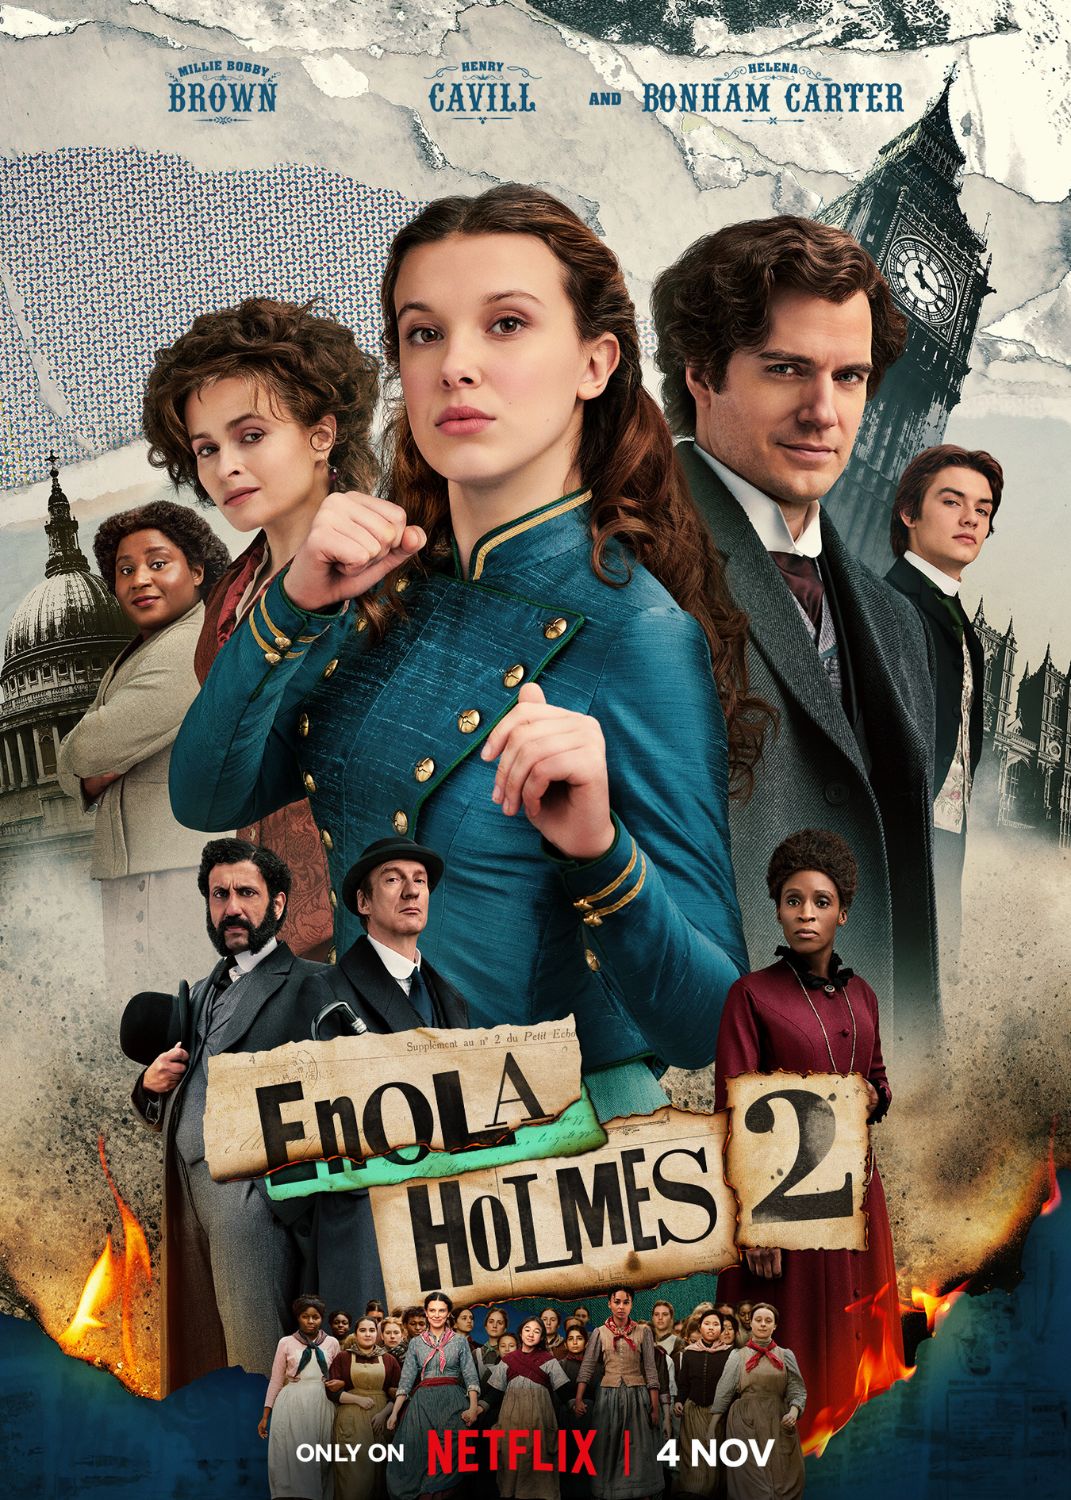 movie review enola holmes 2